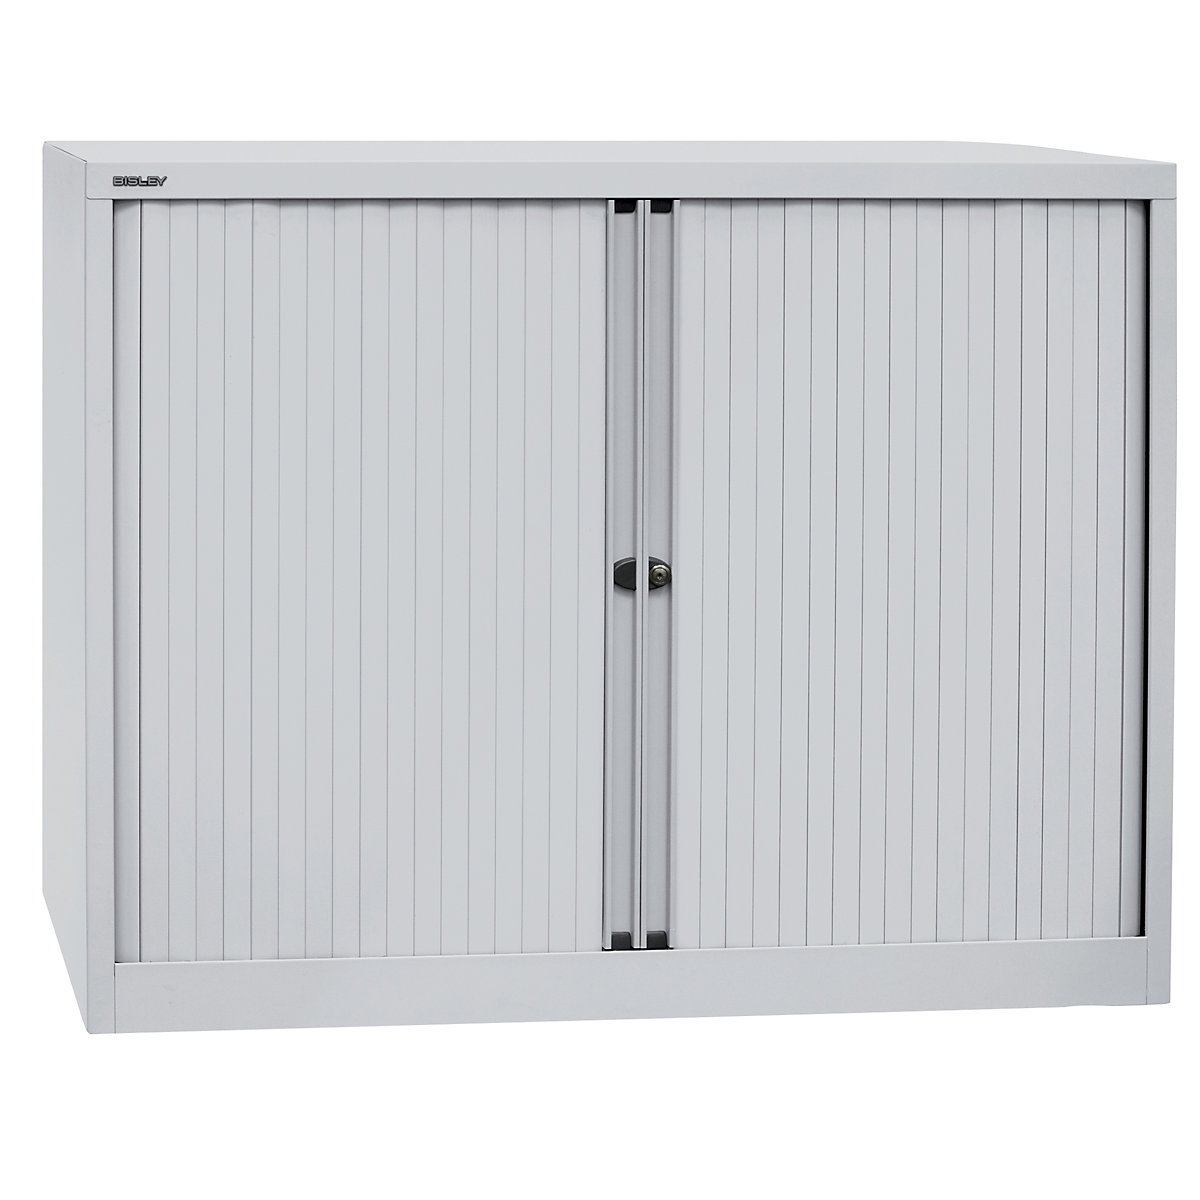 EURO roller shutter cupboard – BISLEY, width 1200 mm, 2 shelves, light grey-7